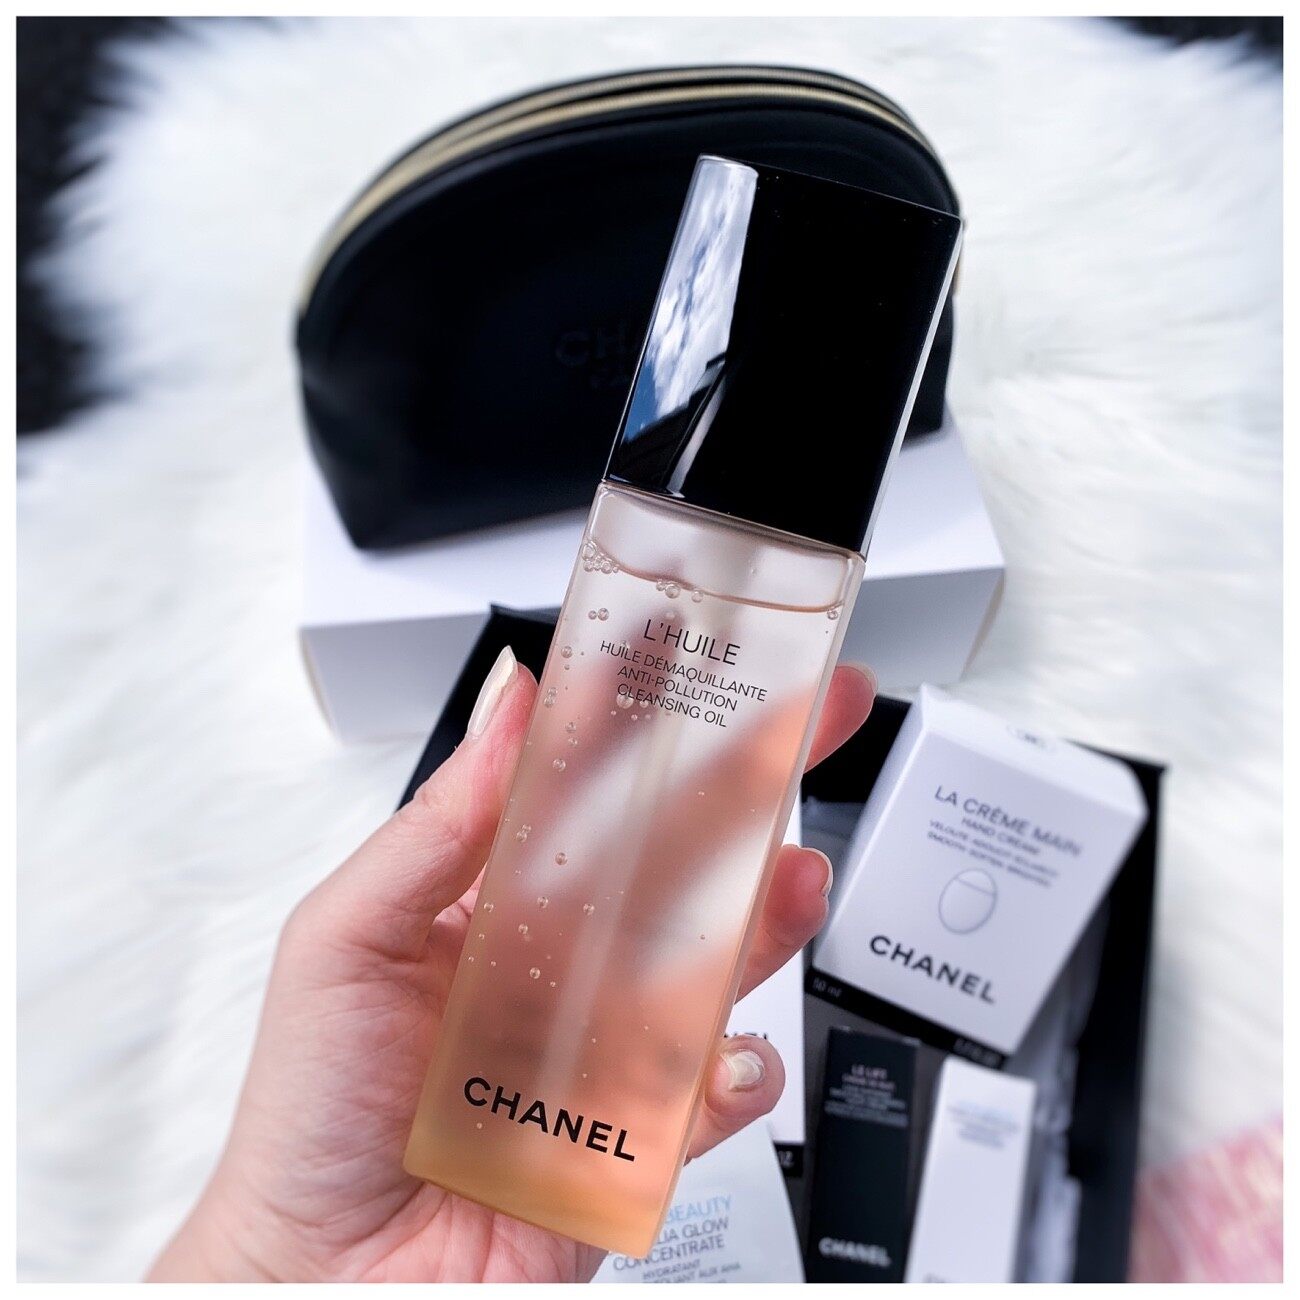 Chanel L'HUILE CLEANSING OIL卸妝油150ml, 美容＆化妝品, 健康及美容